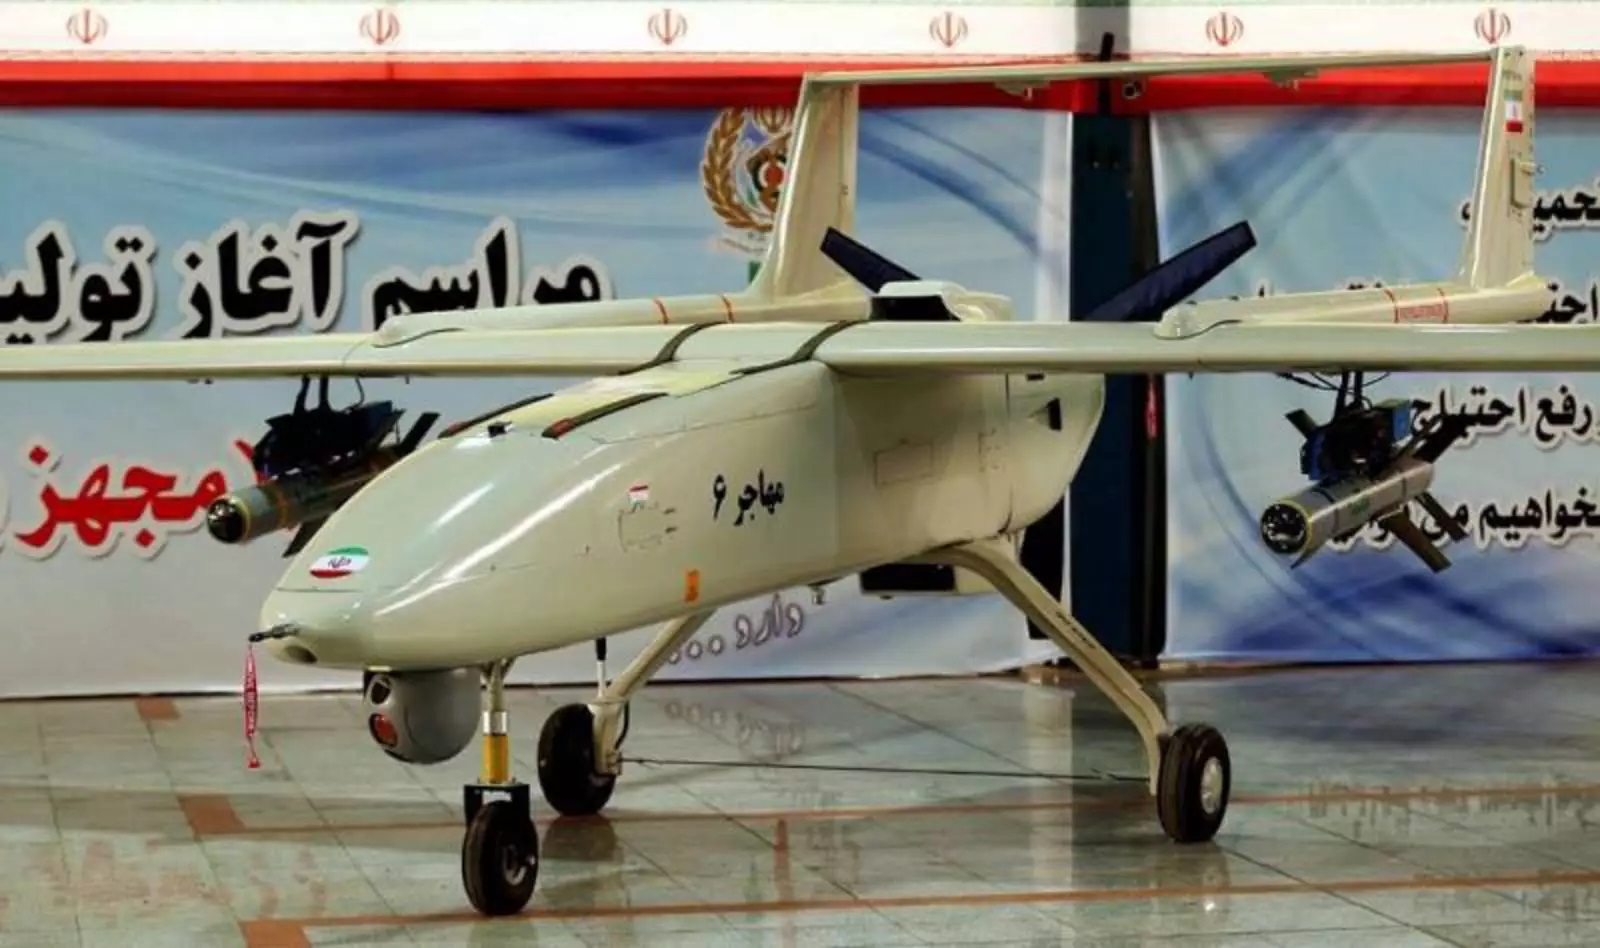 Iran may send more kamikaze drones to Russia - U.S. Secretary of State